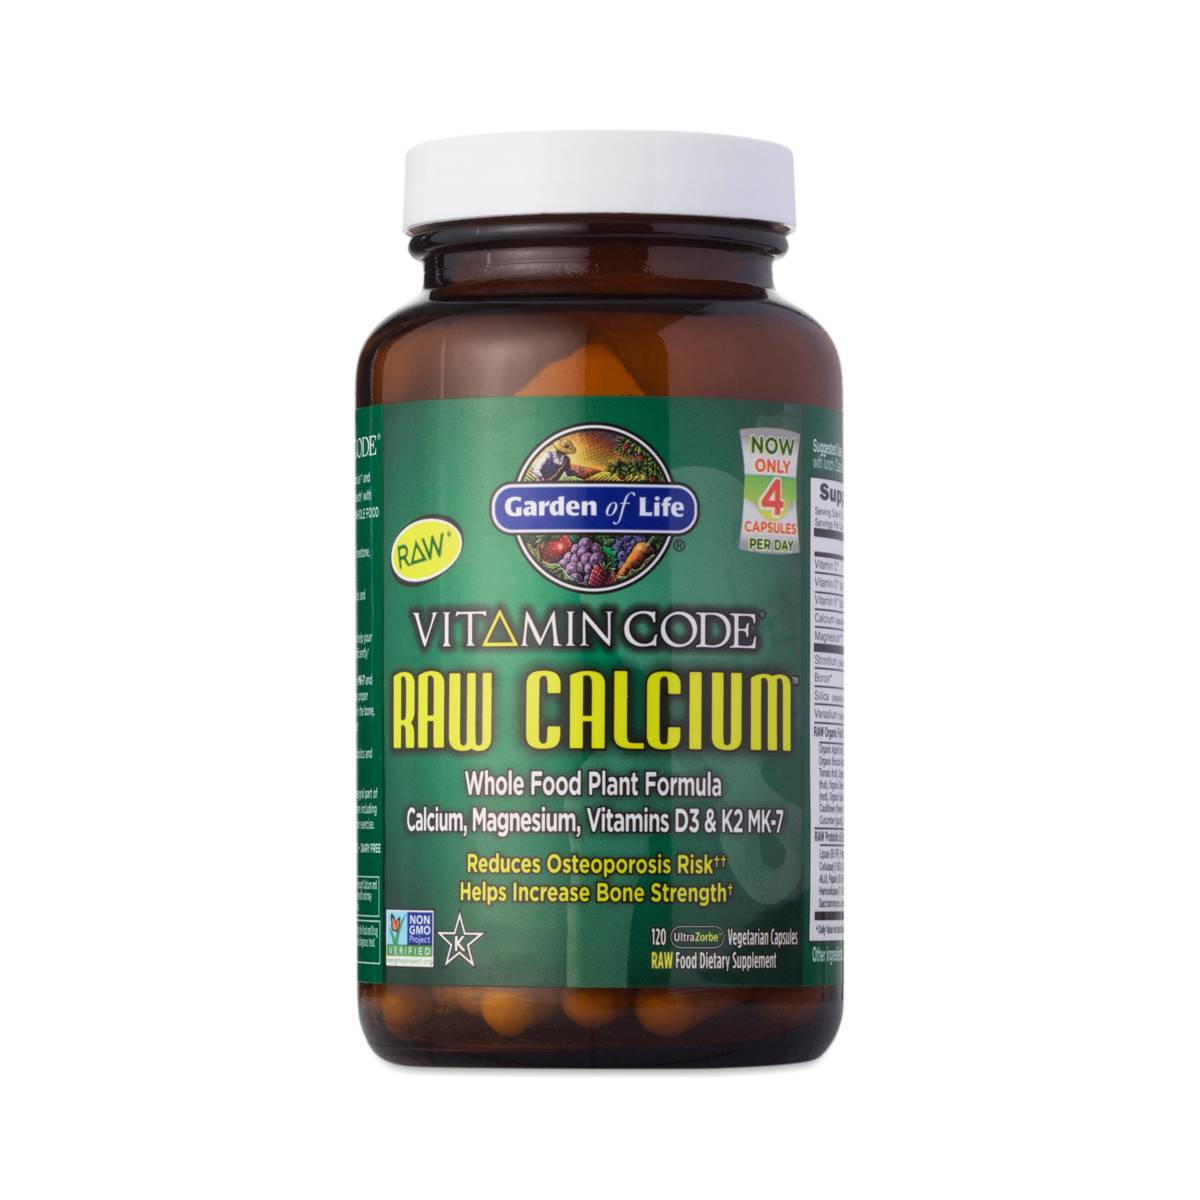 Garden of Life Vitamin Code Raw Calcium, 120 Vegetarian Capsules